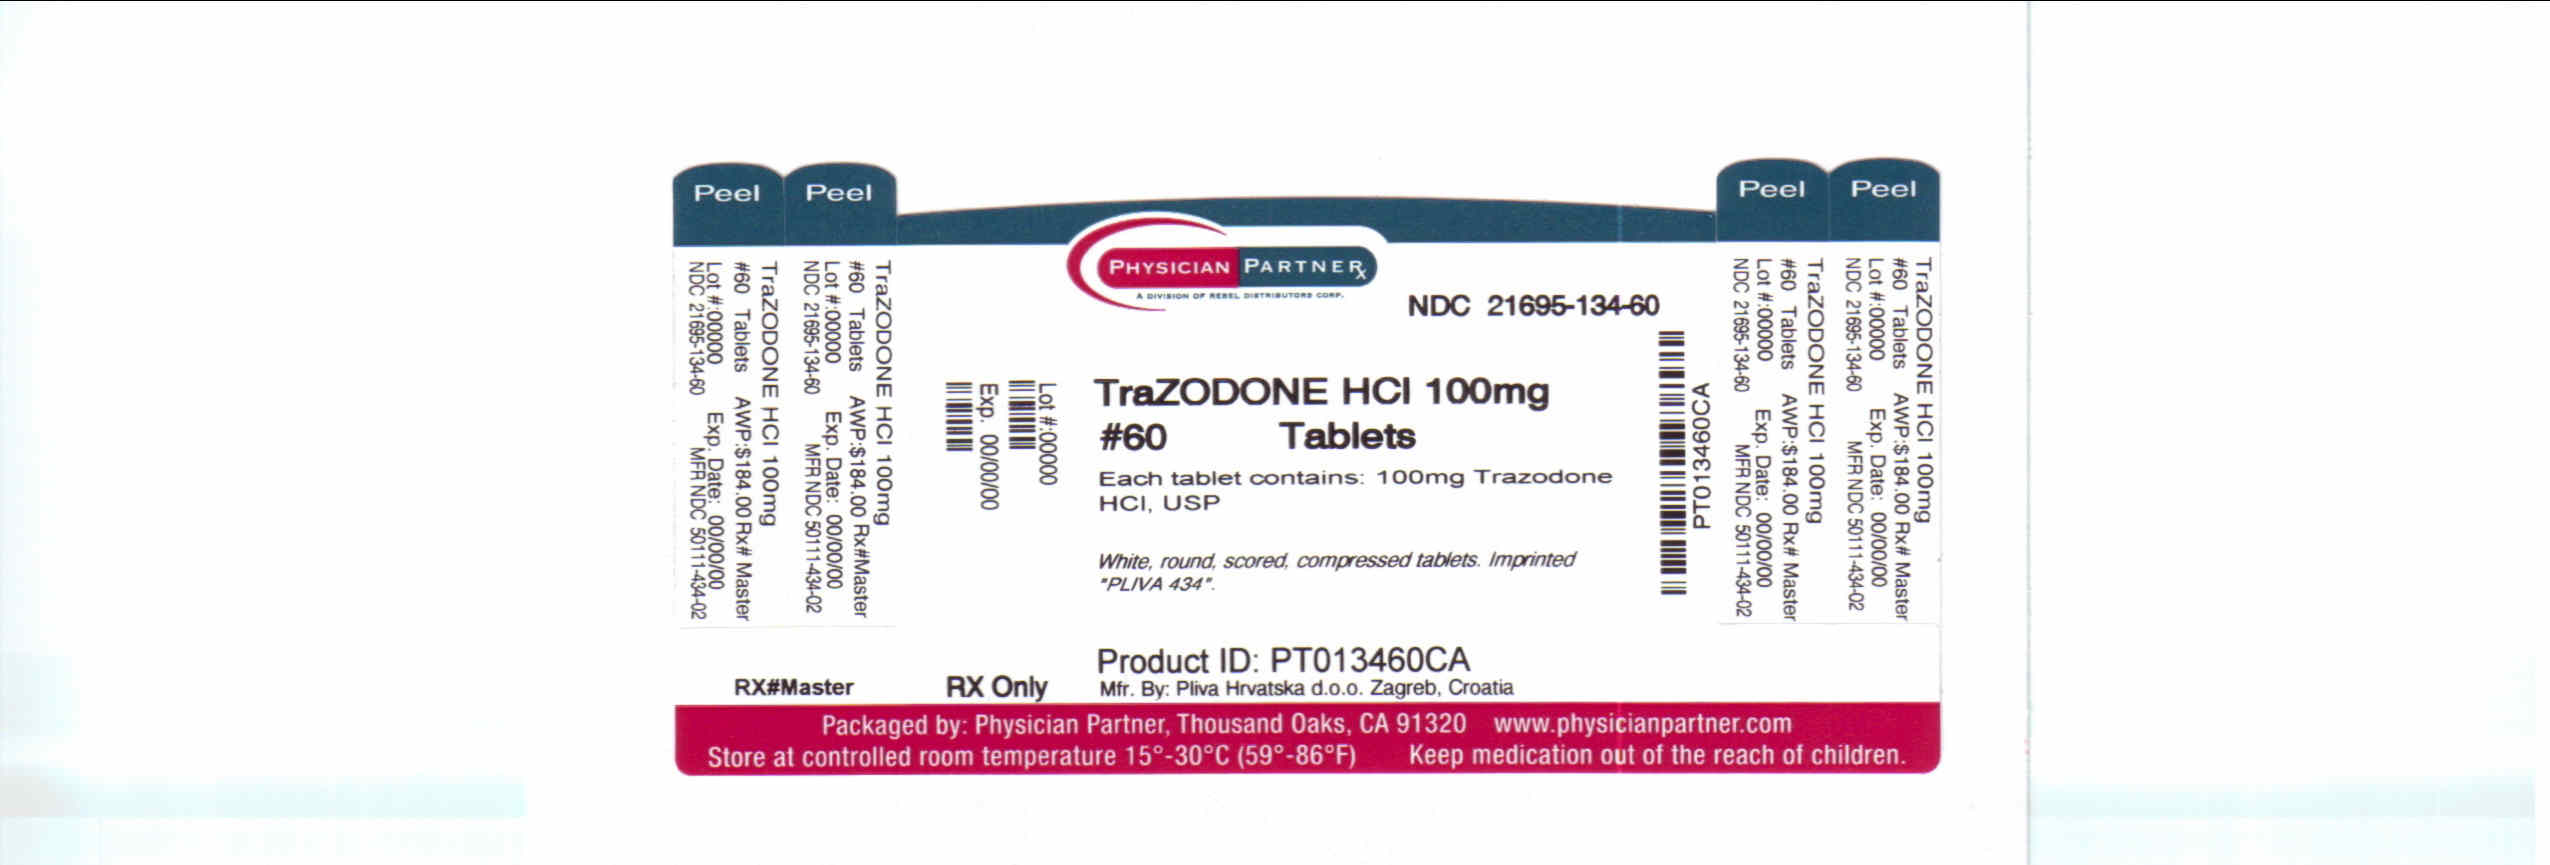 Is Trazodone Hydrochloride | Trazodone Tablet safe while breastfeeding